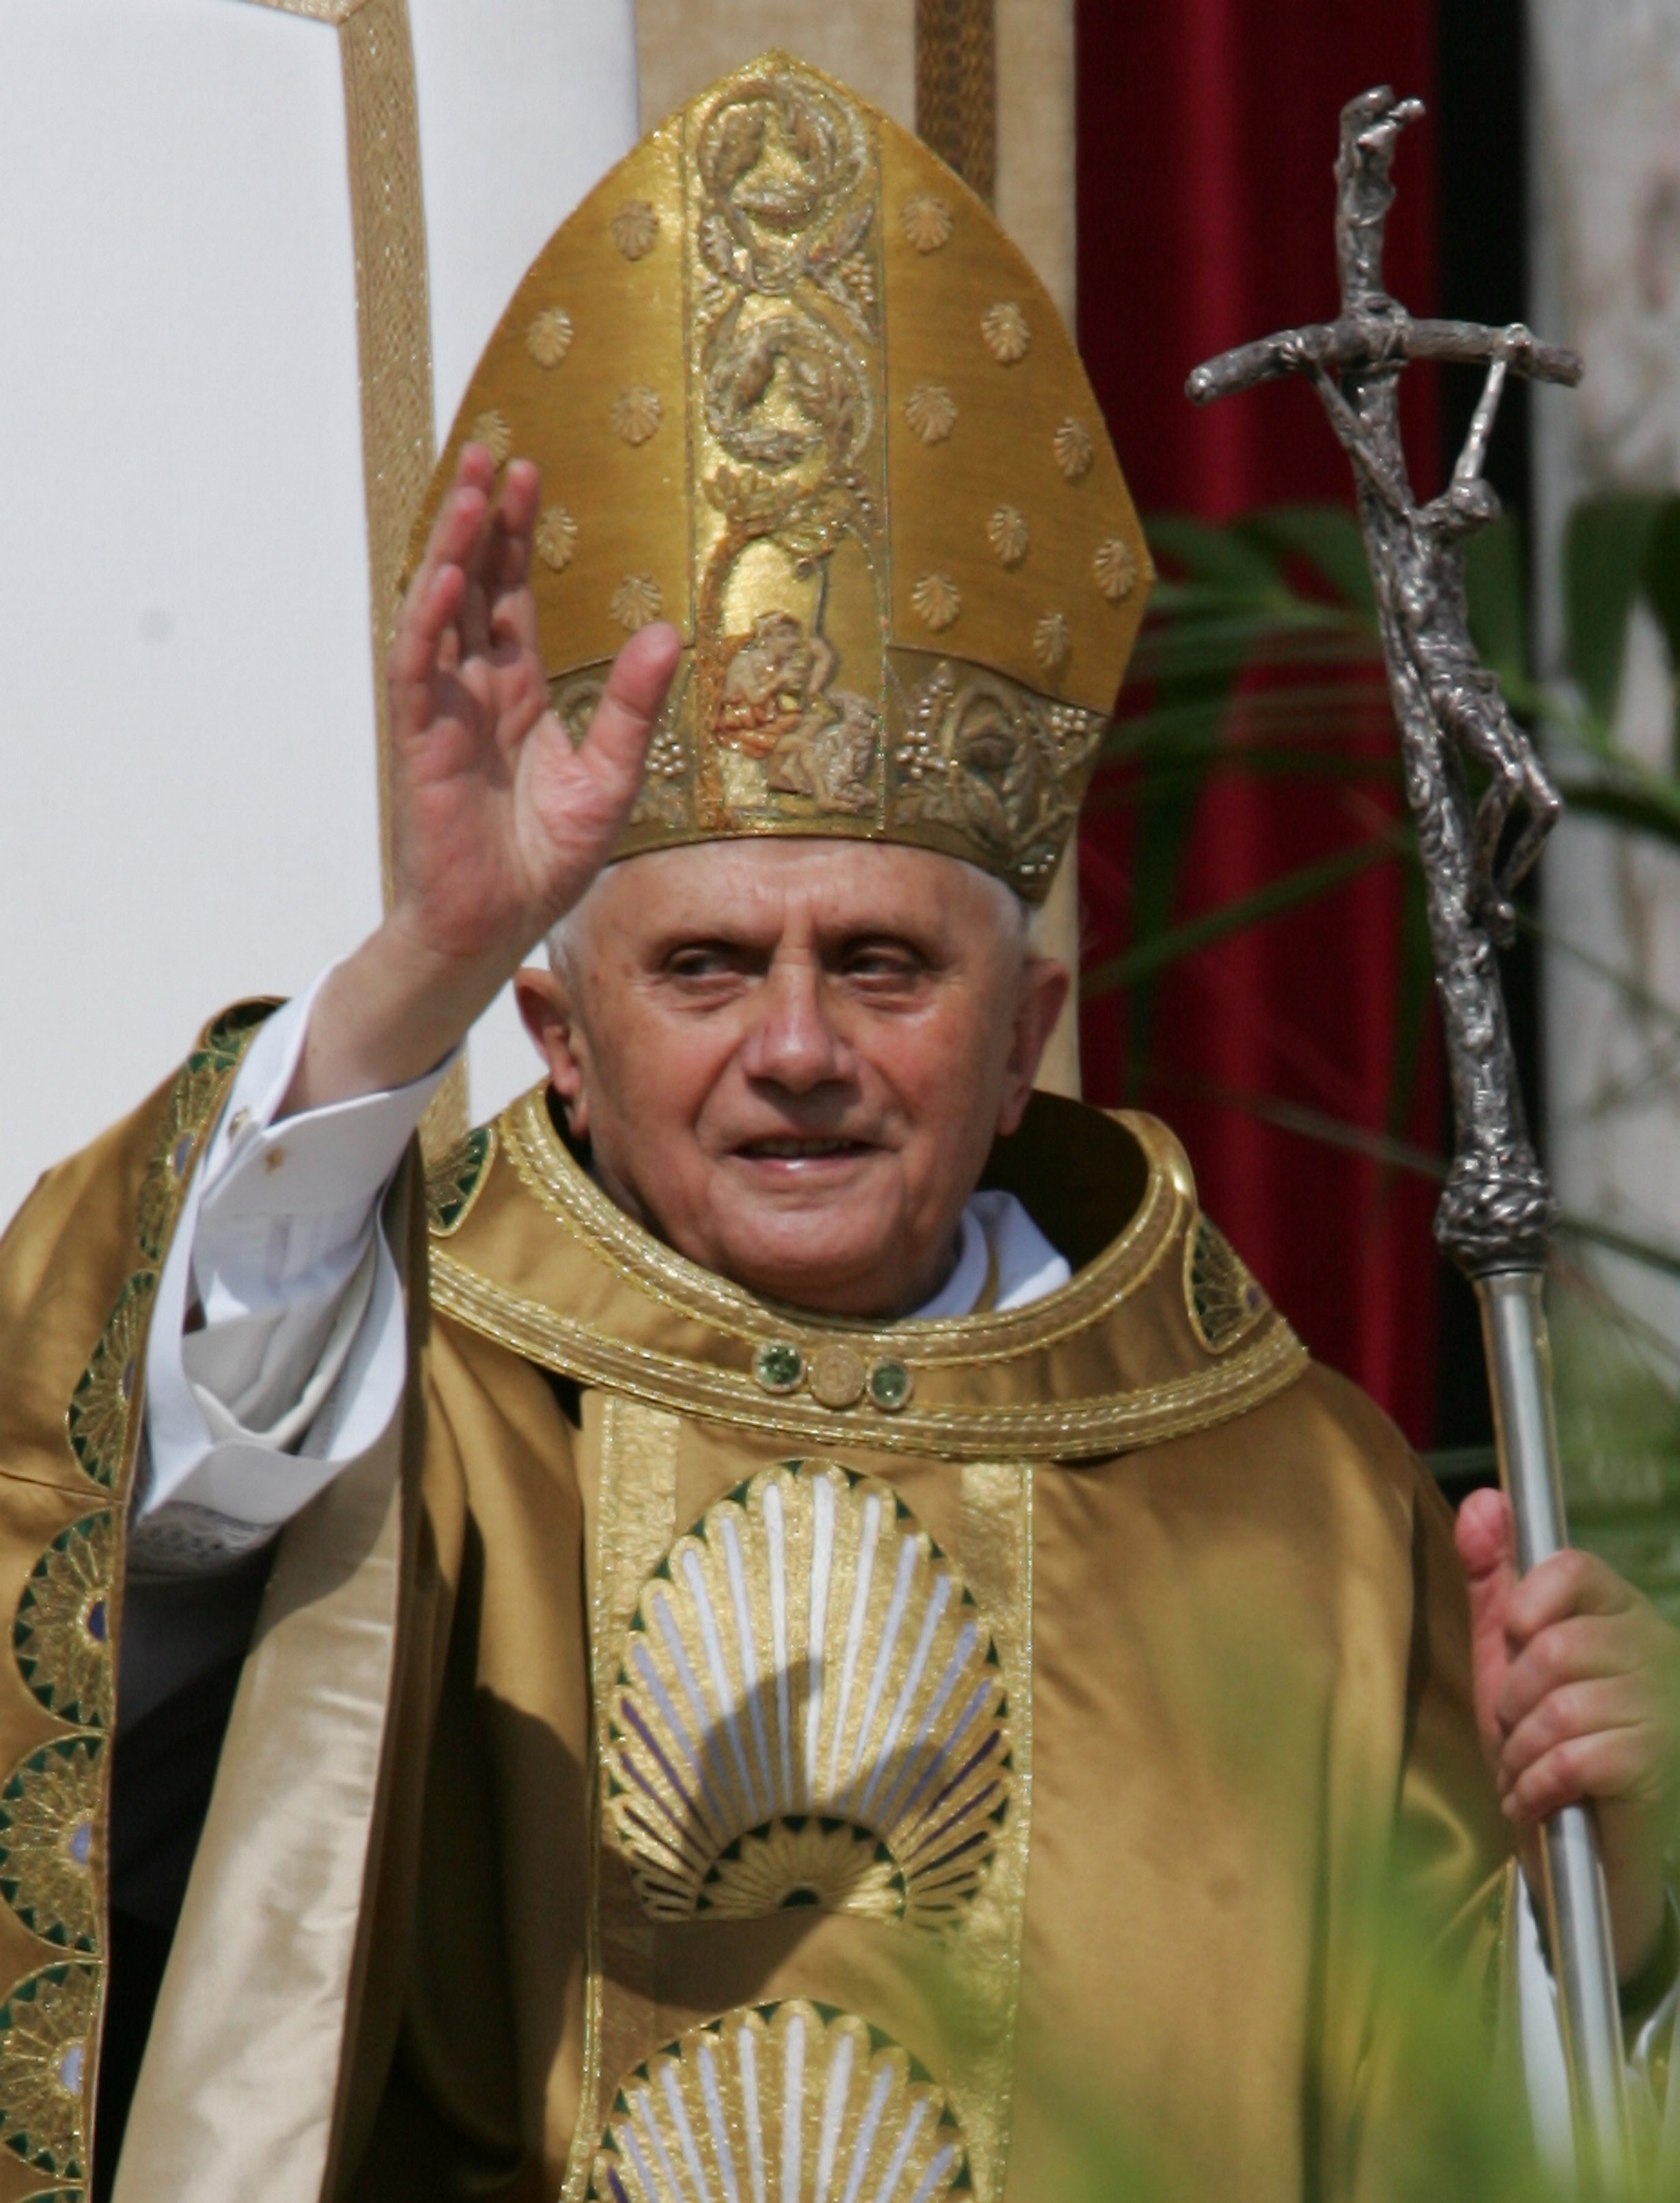 Benedictus XVI, Internet, katolska kyrkan, Konservativ, Vatikanstaten, Vatikanen, Påven